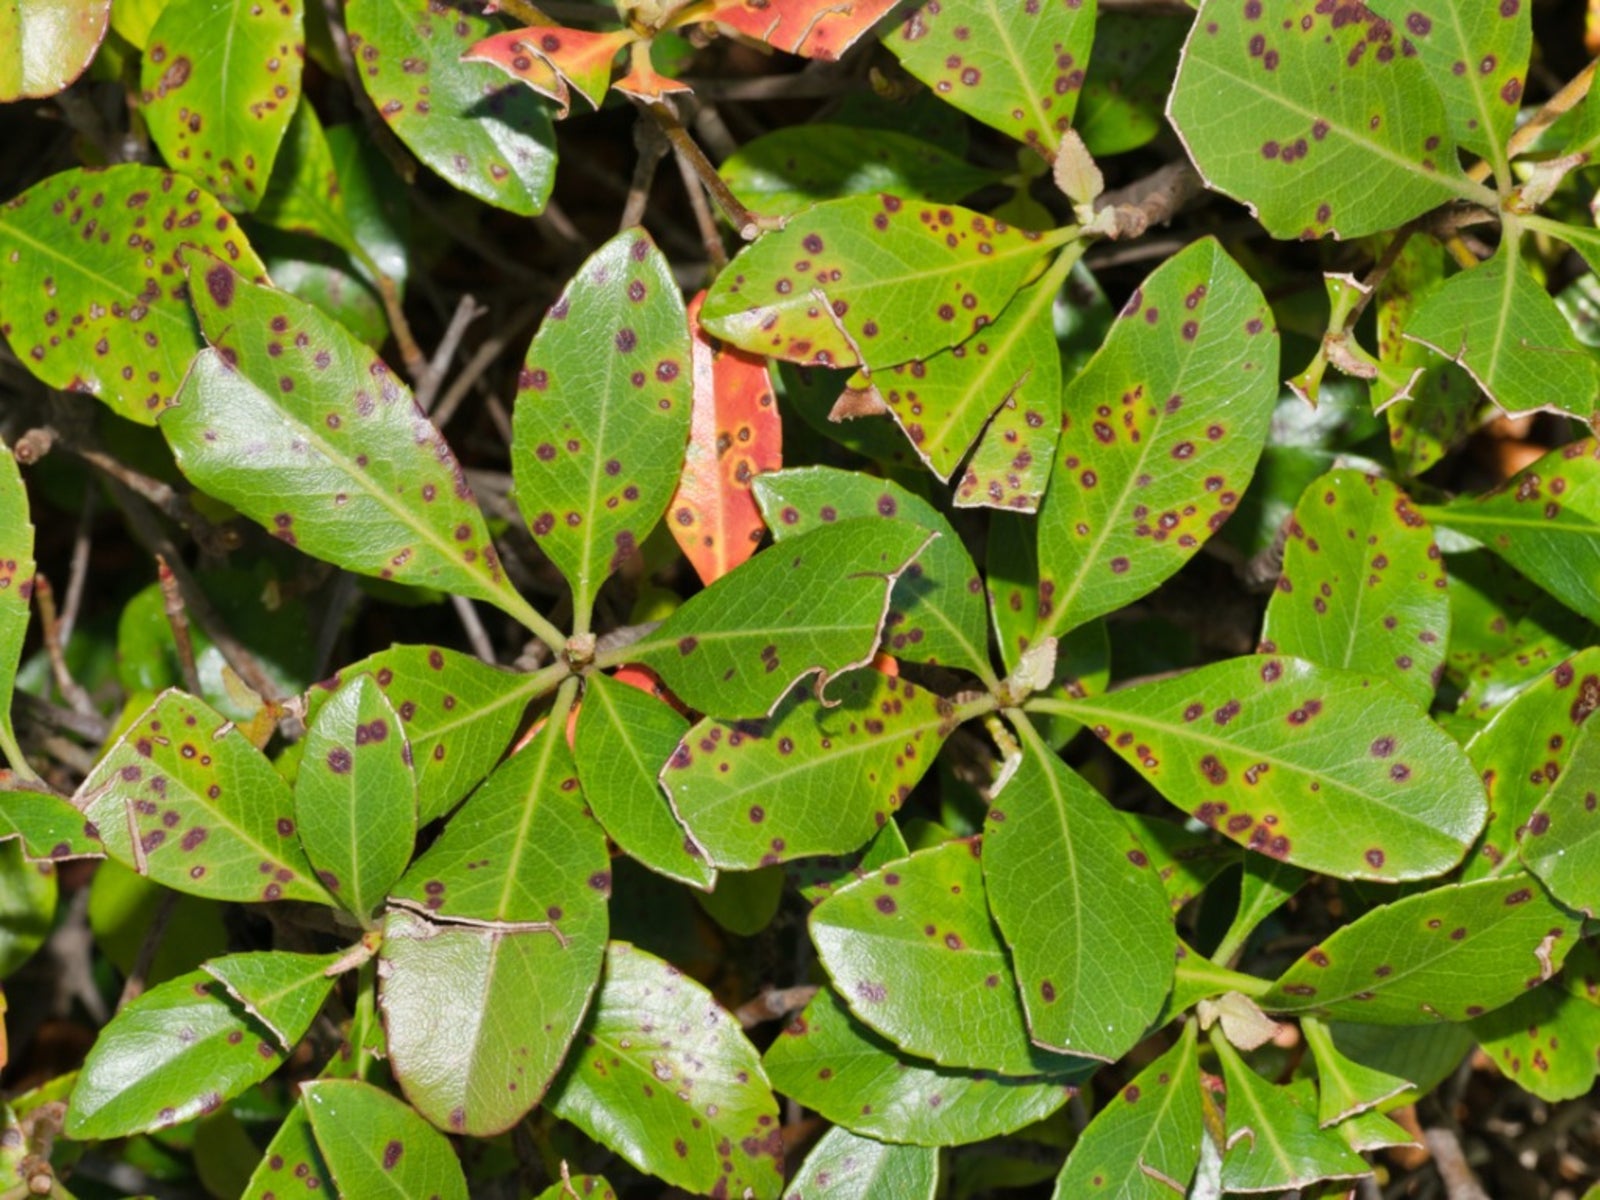 Bacterial Leaf Spot Disease - What Causes Bacterial Leaf Spot